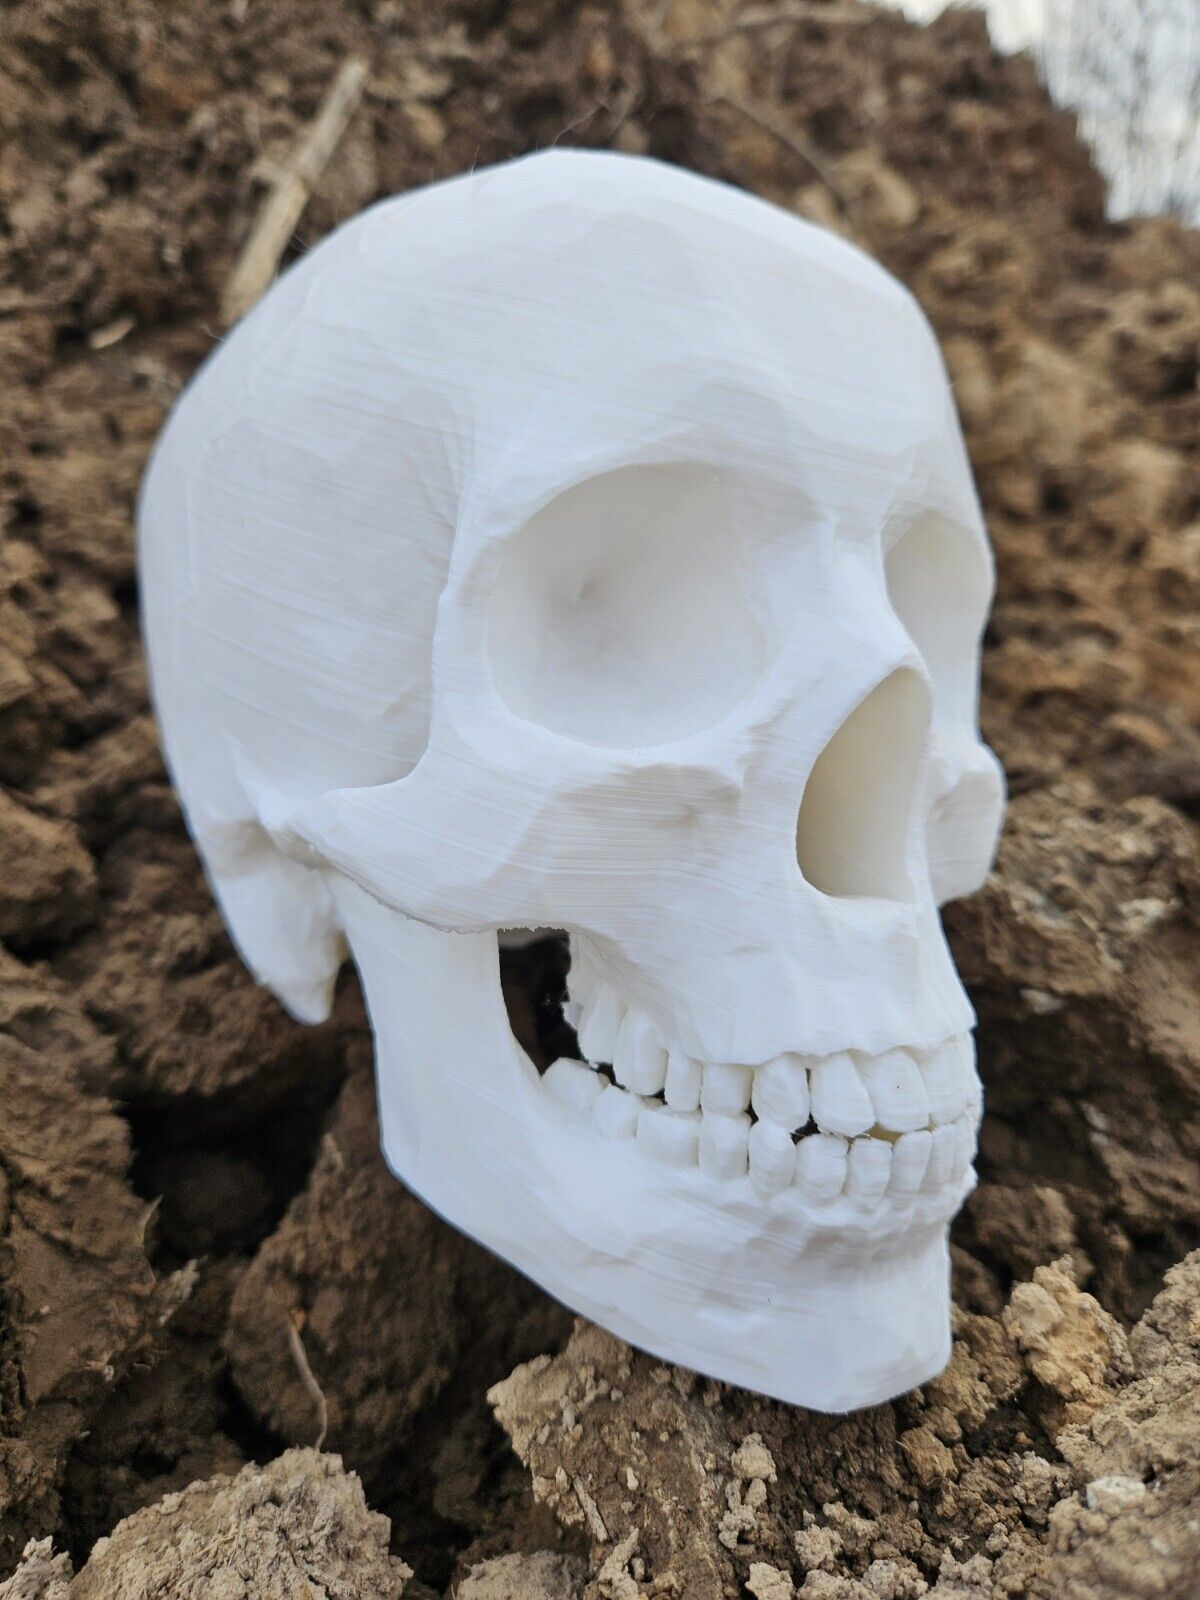 3D PRINTED Life Sized Human Skull Replica Model